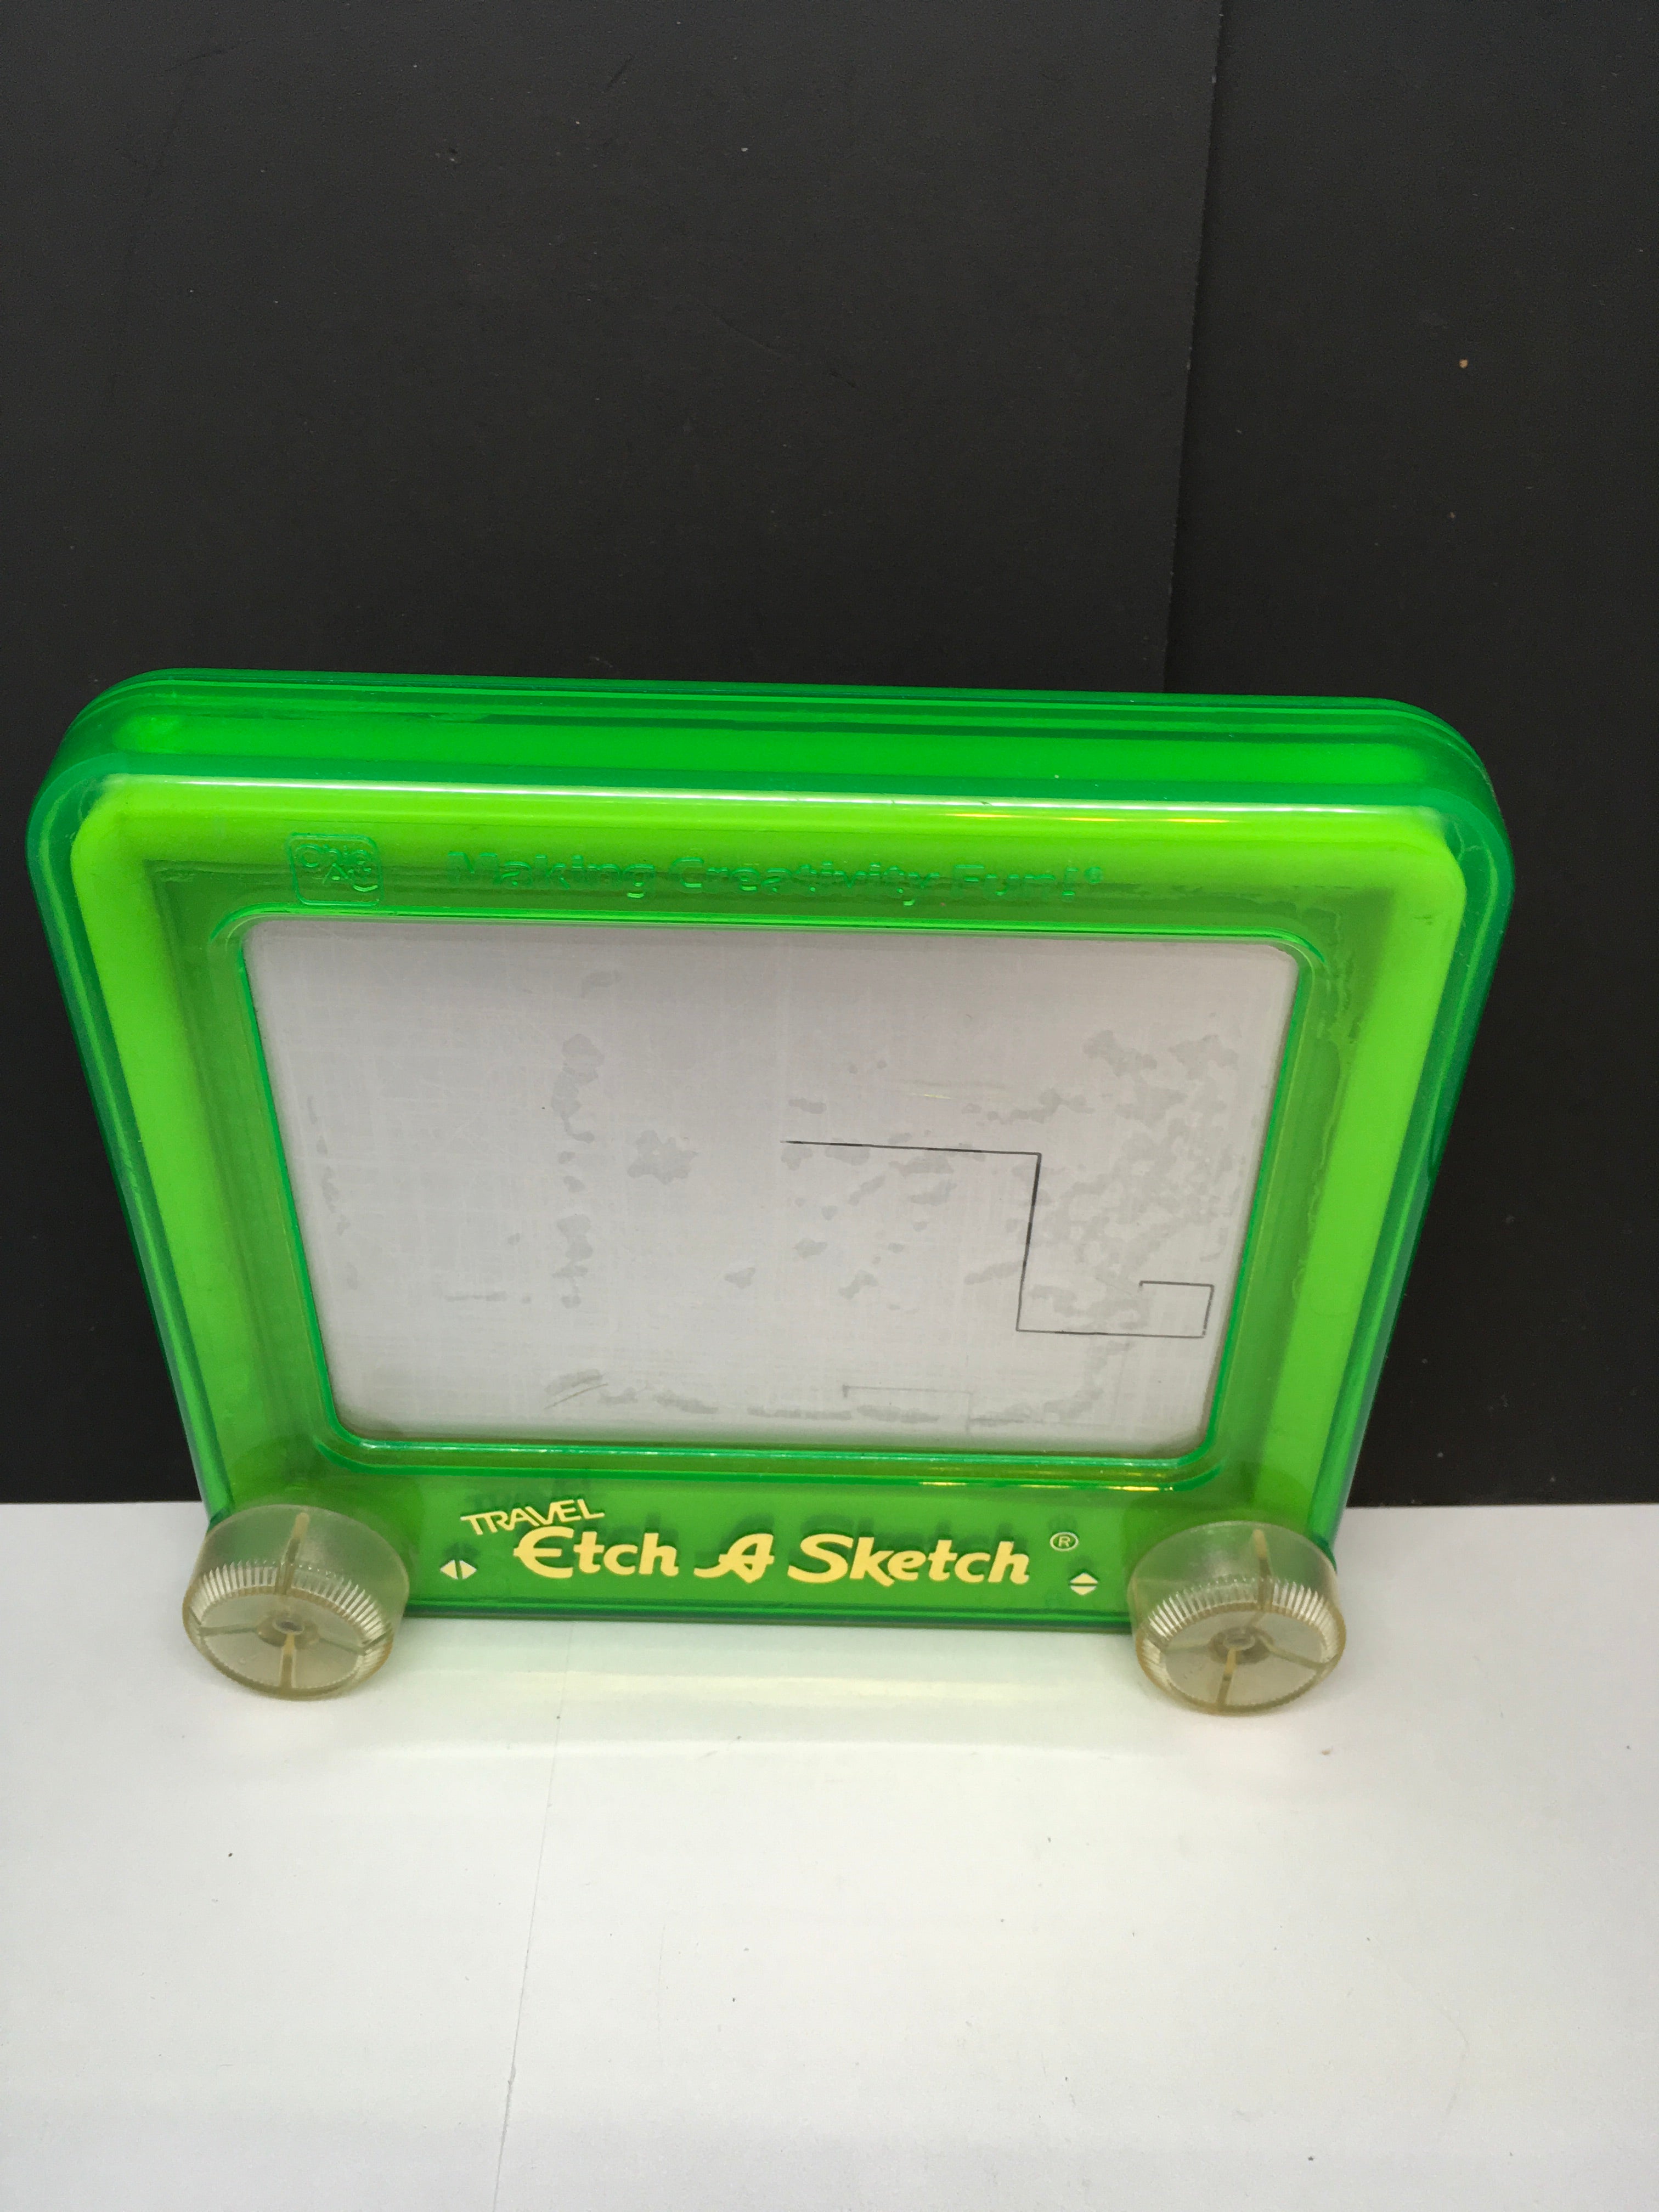 Etch A Sketch Original Ohio Art Hot Pocket Rare Green With White Knobs #516  mini